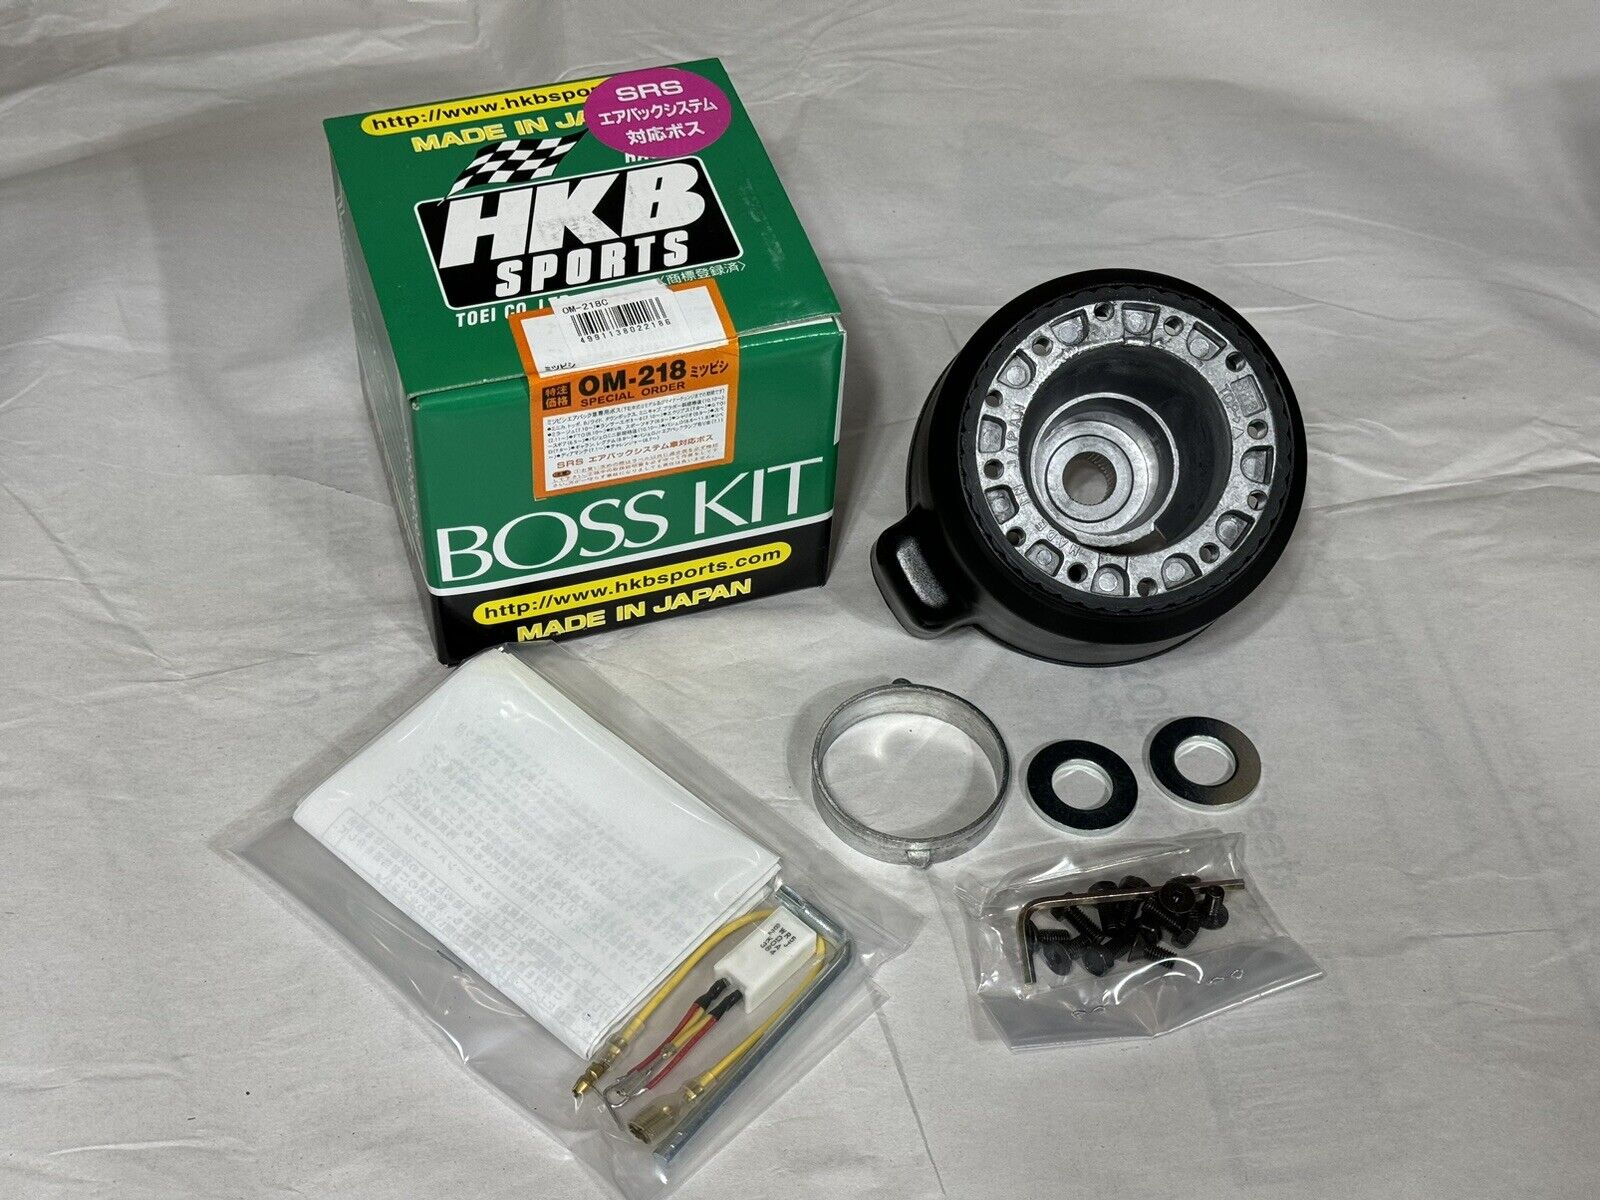 Steering Wheel Adapter HKB SPORTS Boss Kit 1995-2005 Mitsubishi Diamante